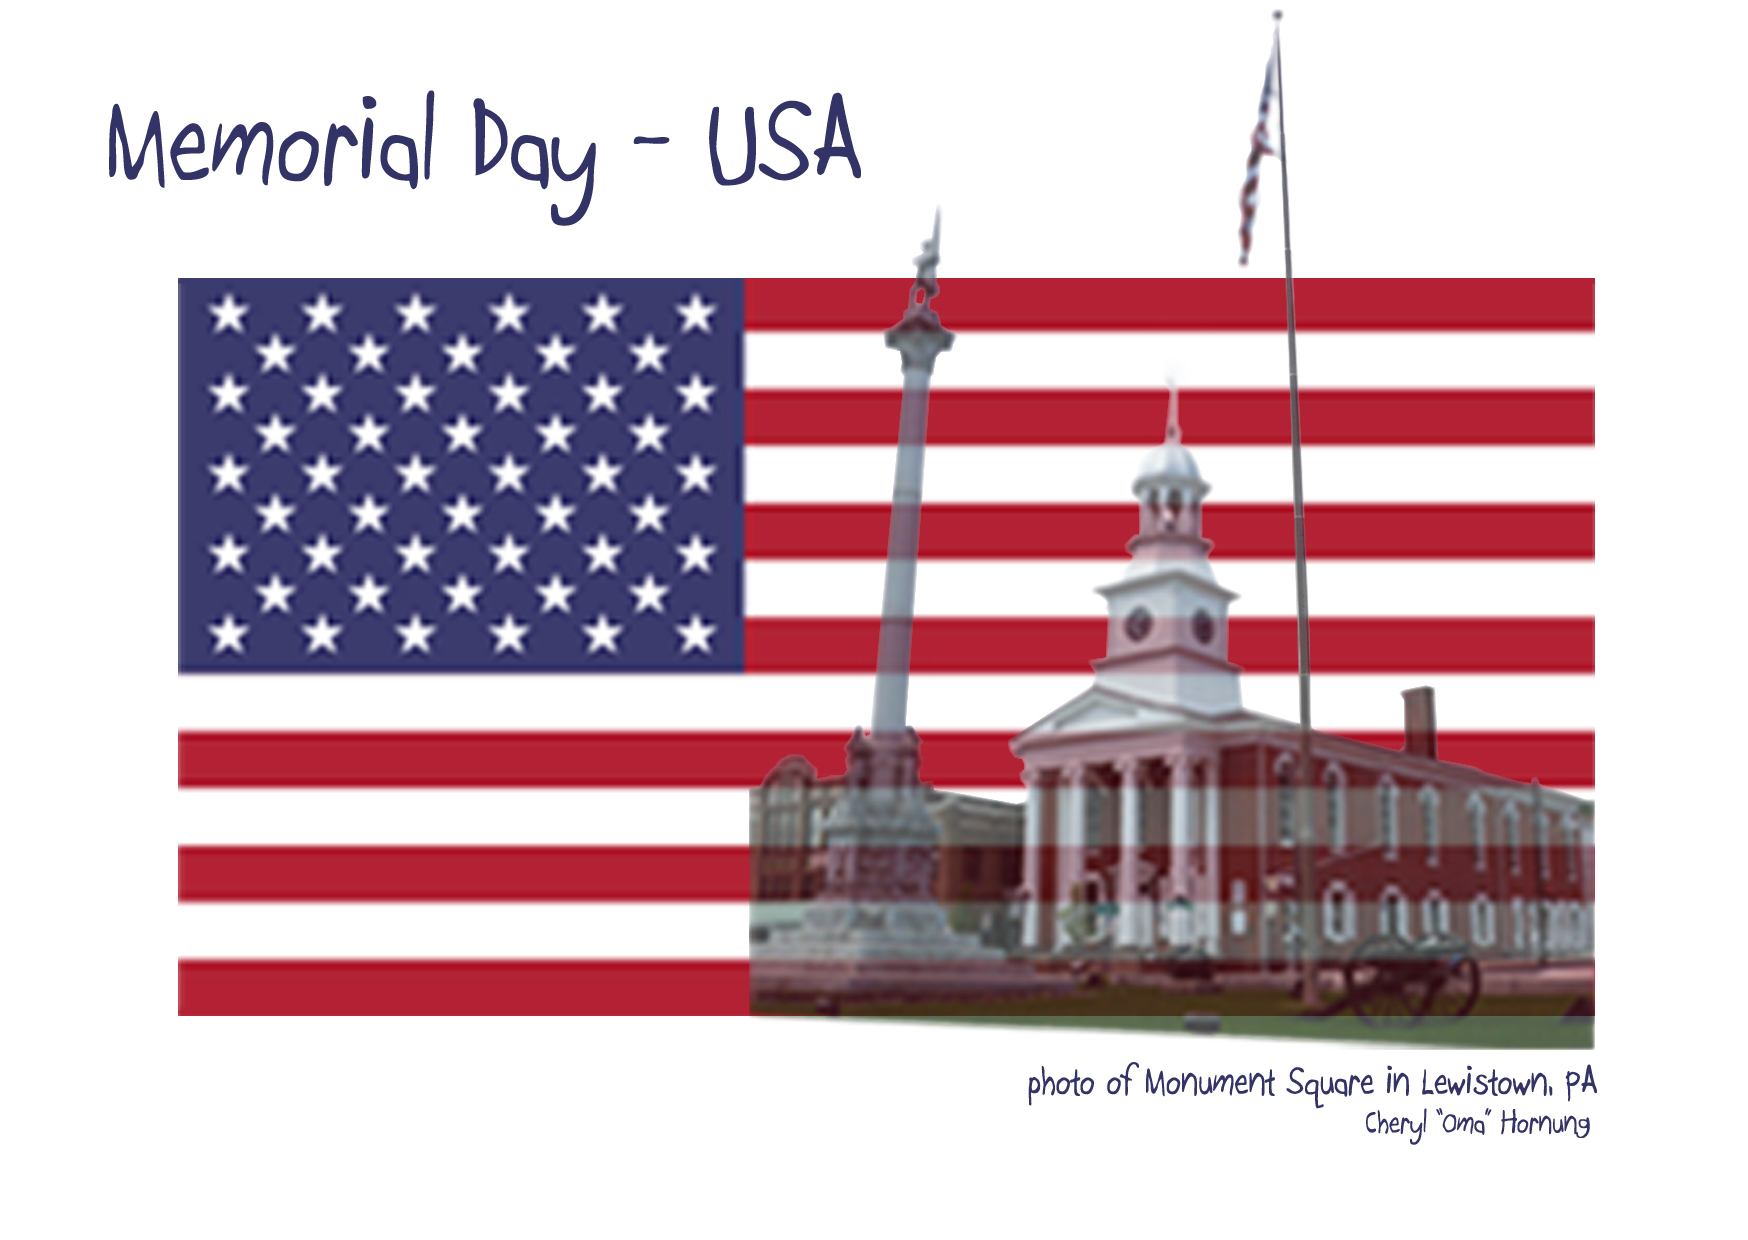 America - Memorial Day USA